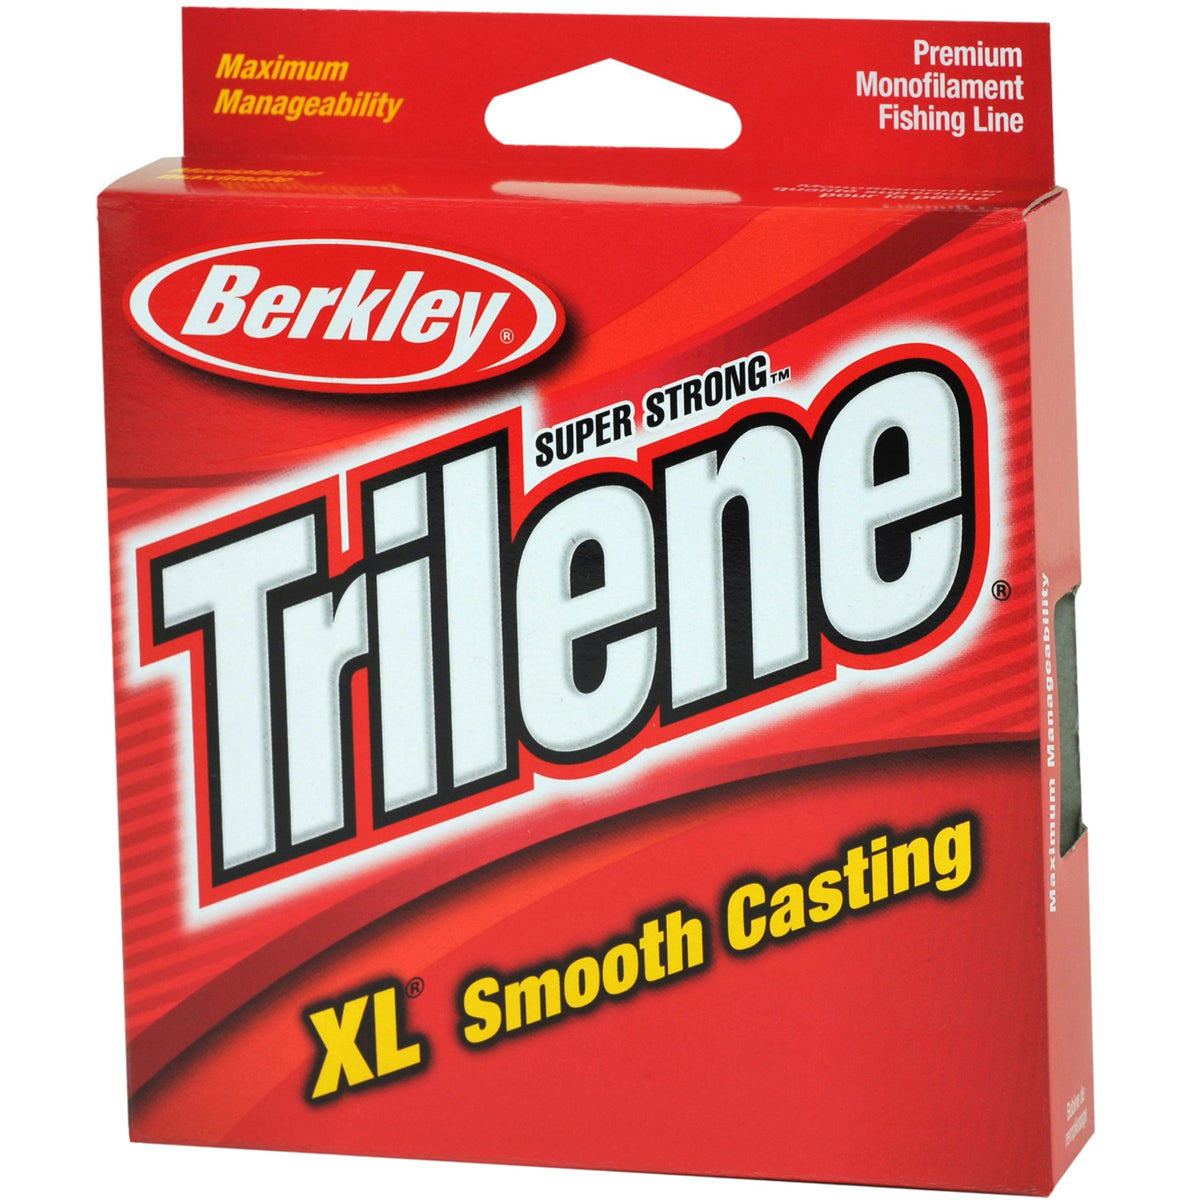 Berkley Trilene XL Smooth Casting Fishing Line (110 yds) - Clear Berkley